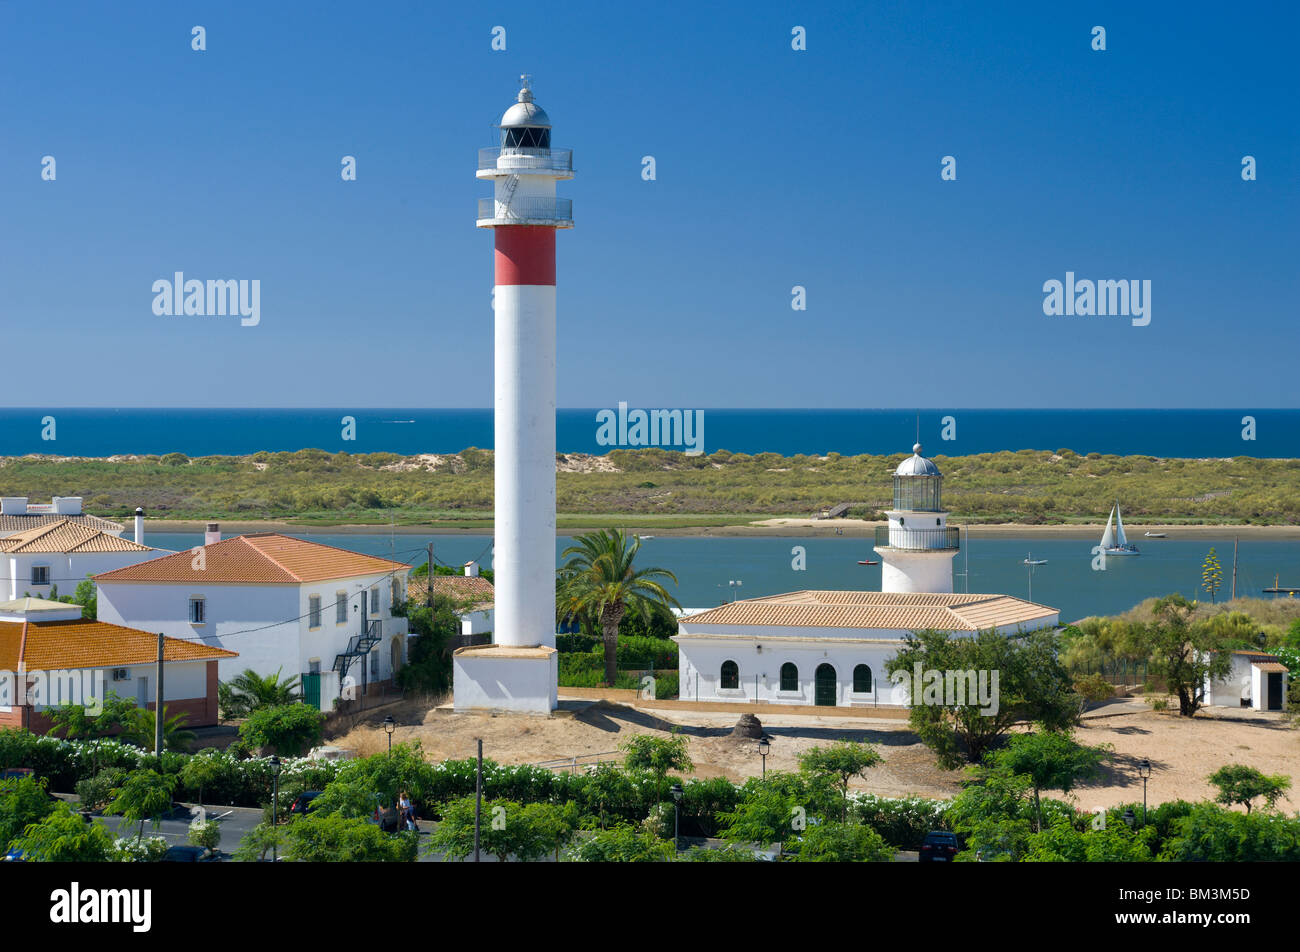 Spain, Andalusia, The Costa De La Luz, El Rompido - The Lighthouse Stock Photo